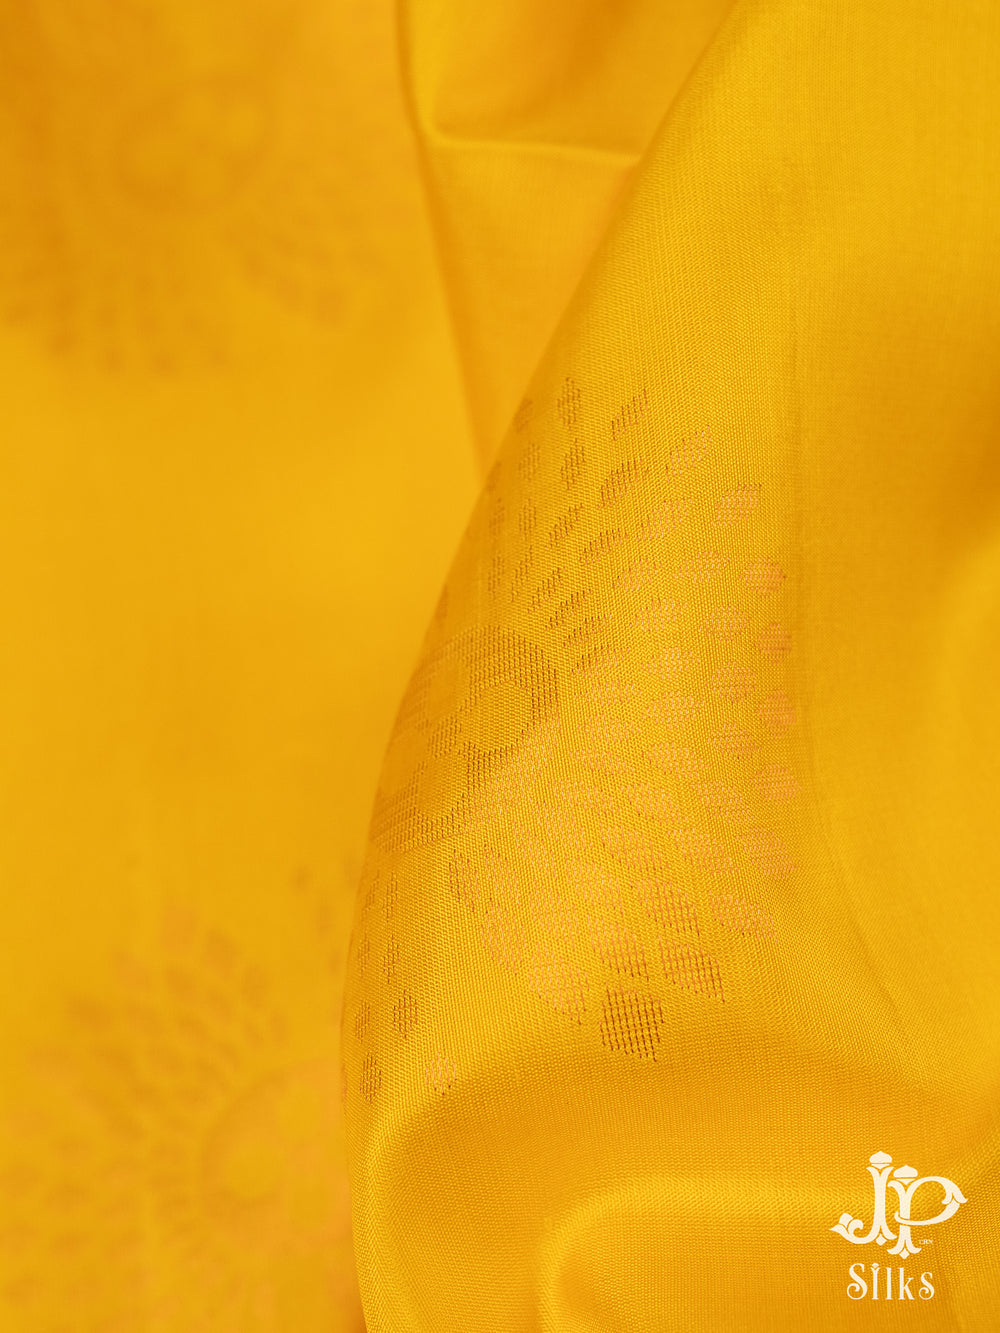 Lemon Yellow and Ink Blue Soft SIlk Saree - D5952 - View 1